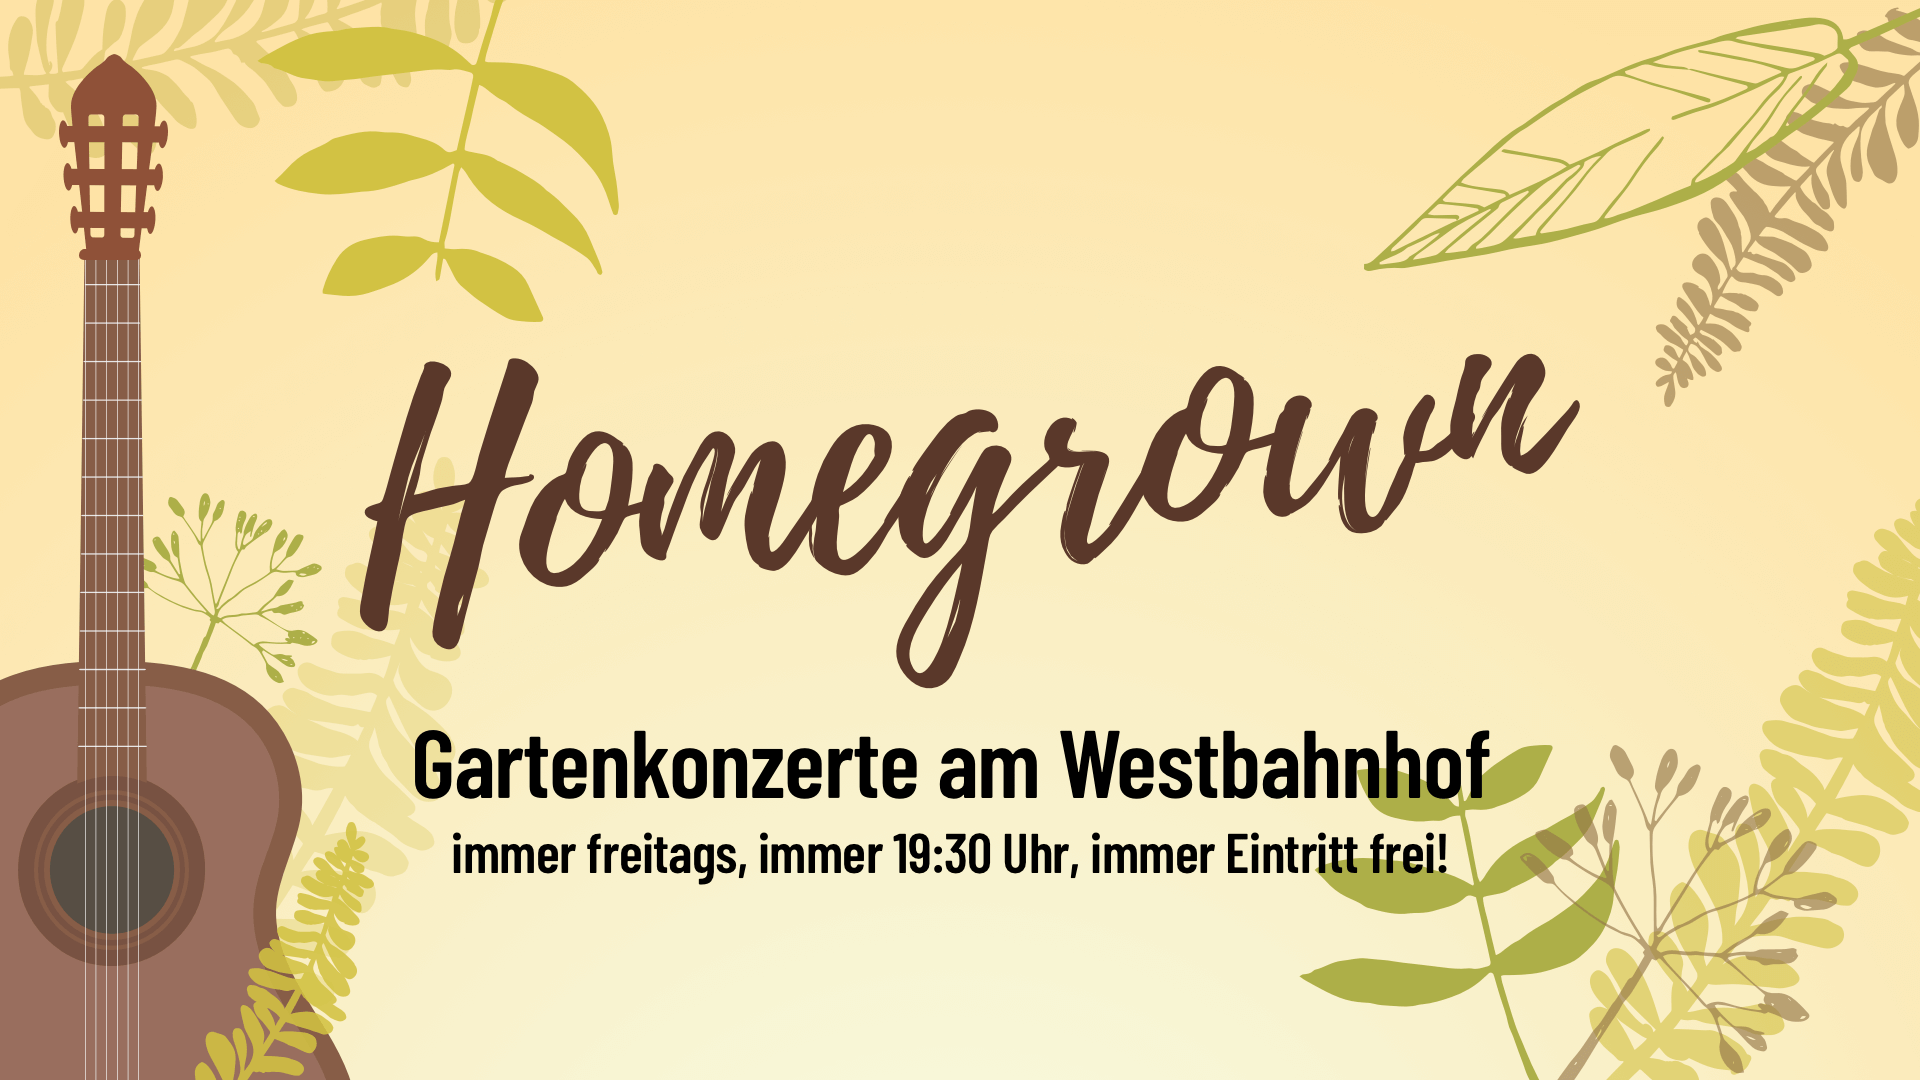 Homegrown - Gartenkonzerte am Westbahnhof